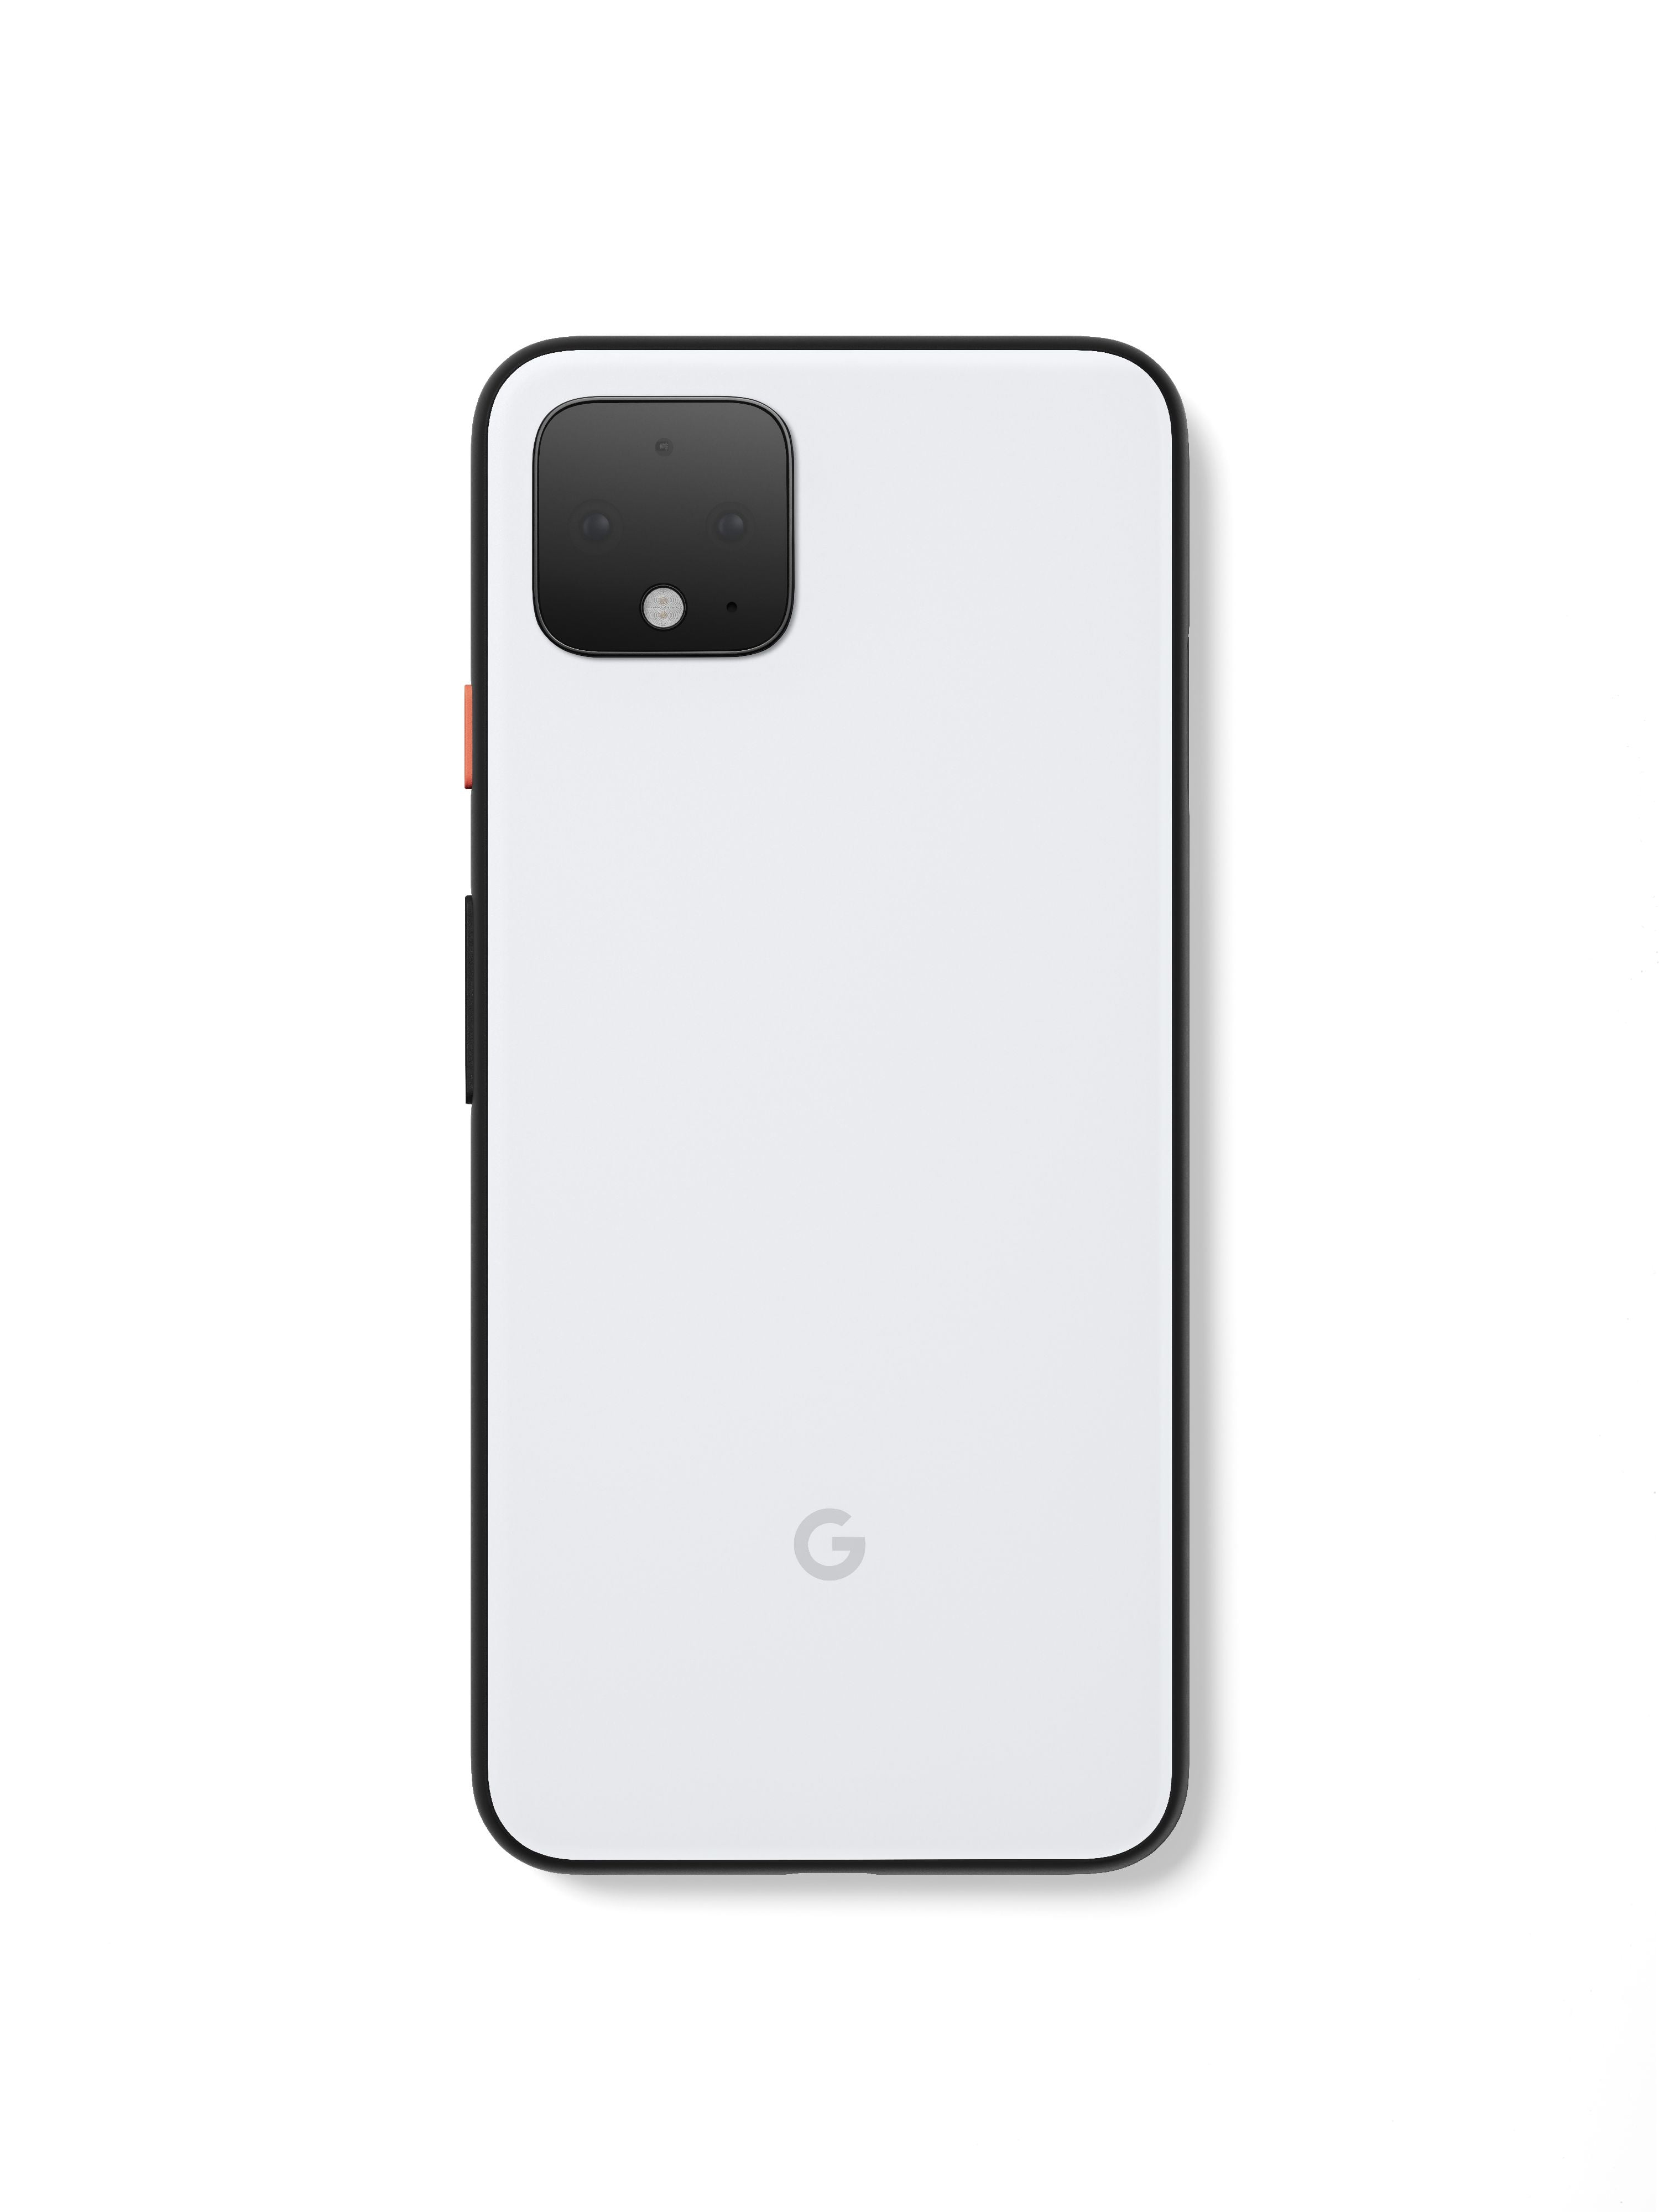 Google Pixel 3 XL 128gb White Unlocked Fast LOOK for sale online 